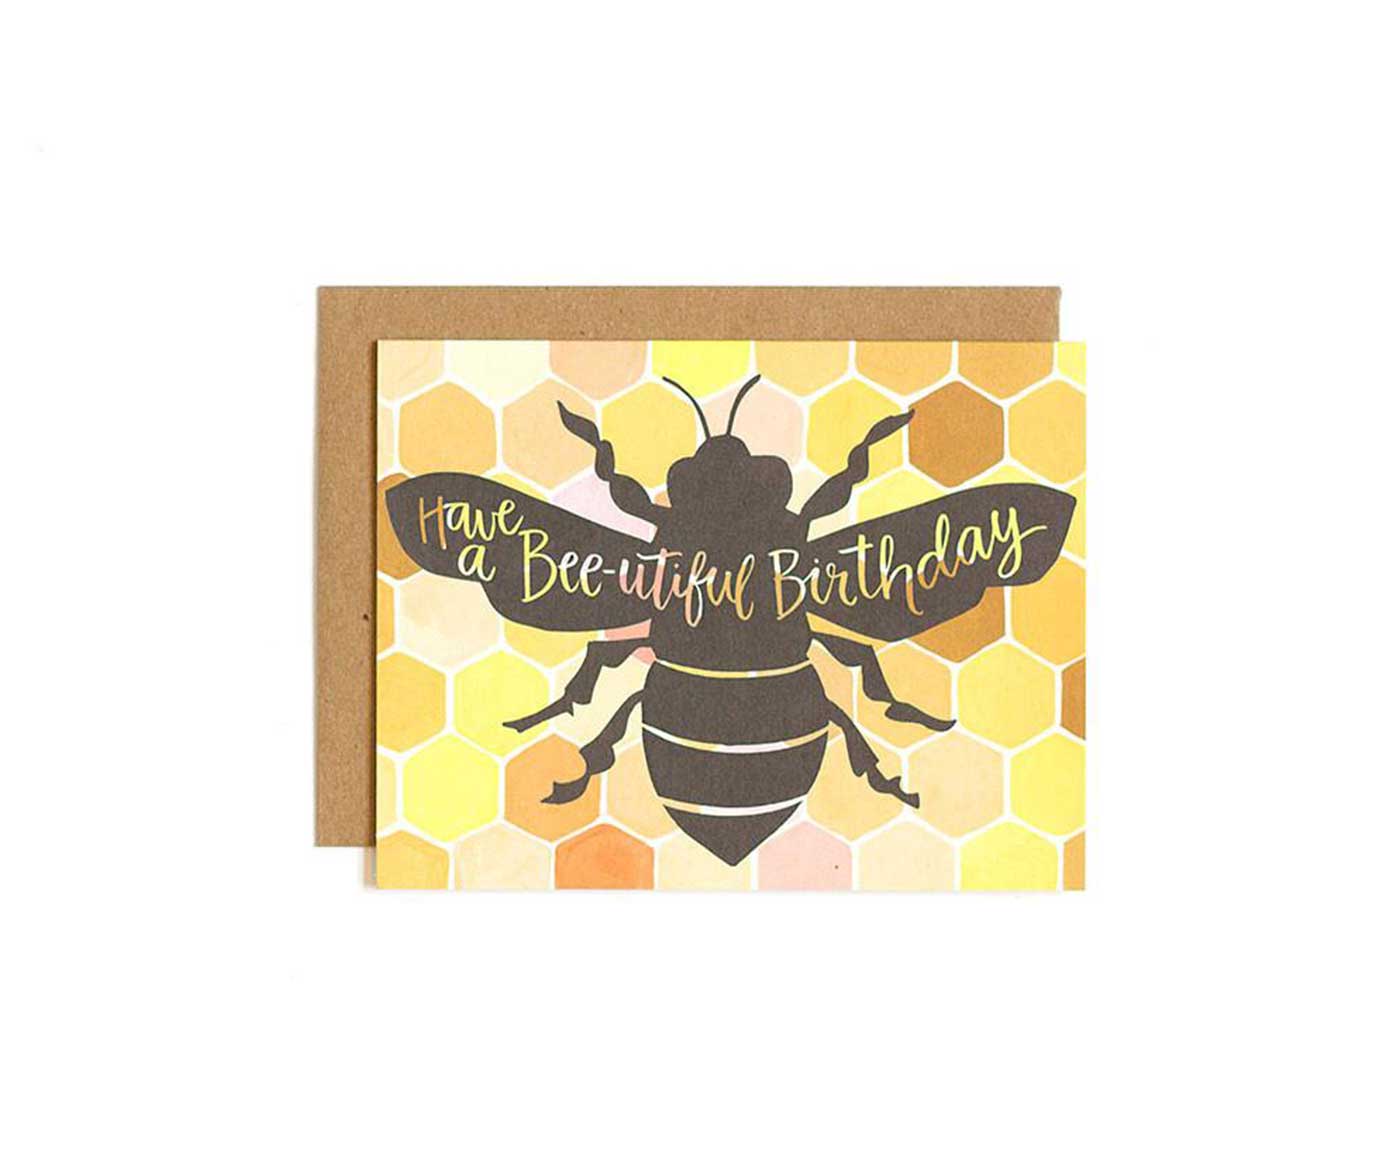 Bee-utiful Birthday Greeting Card